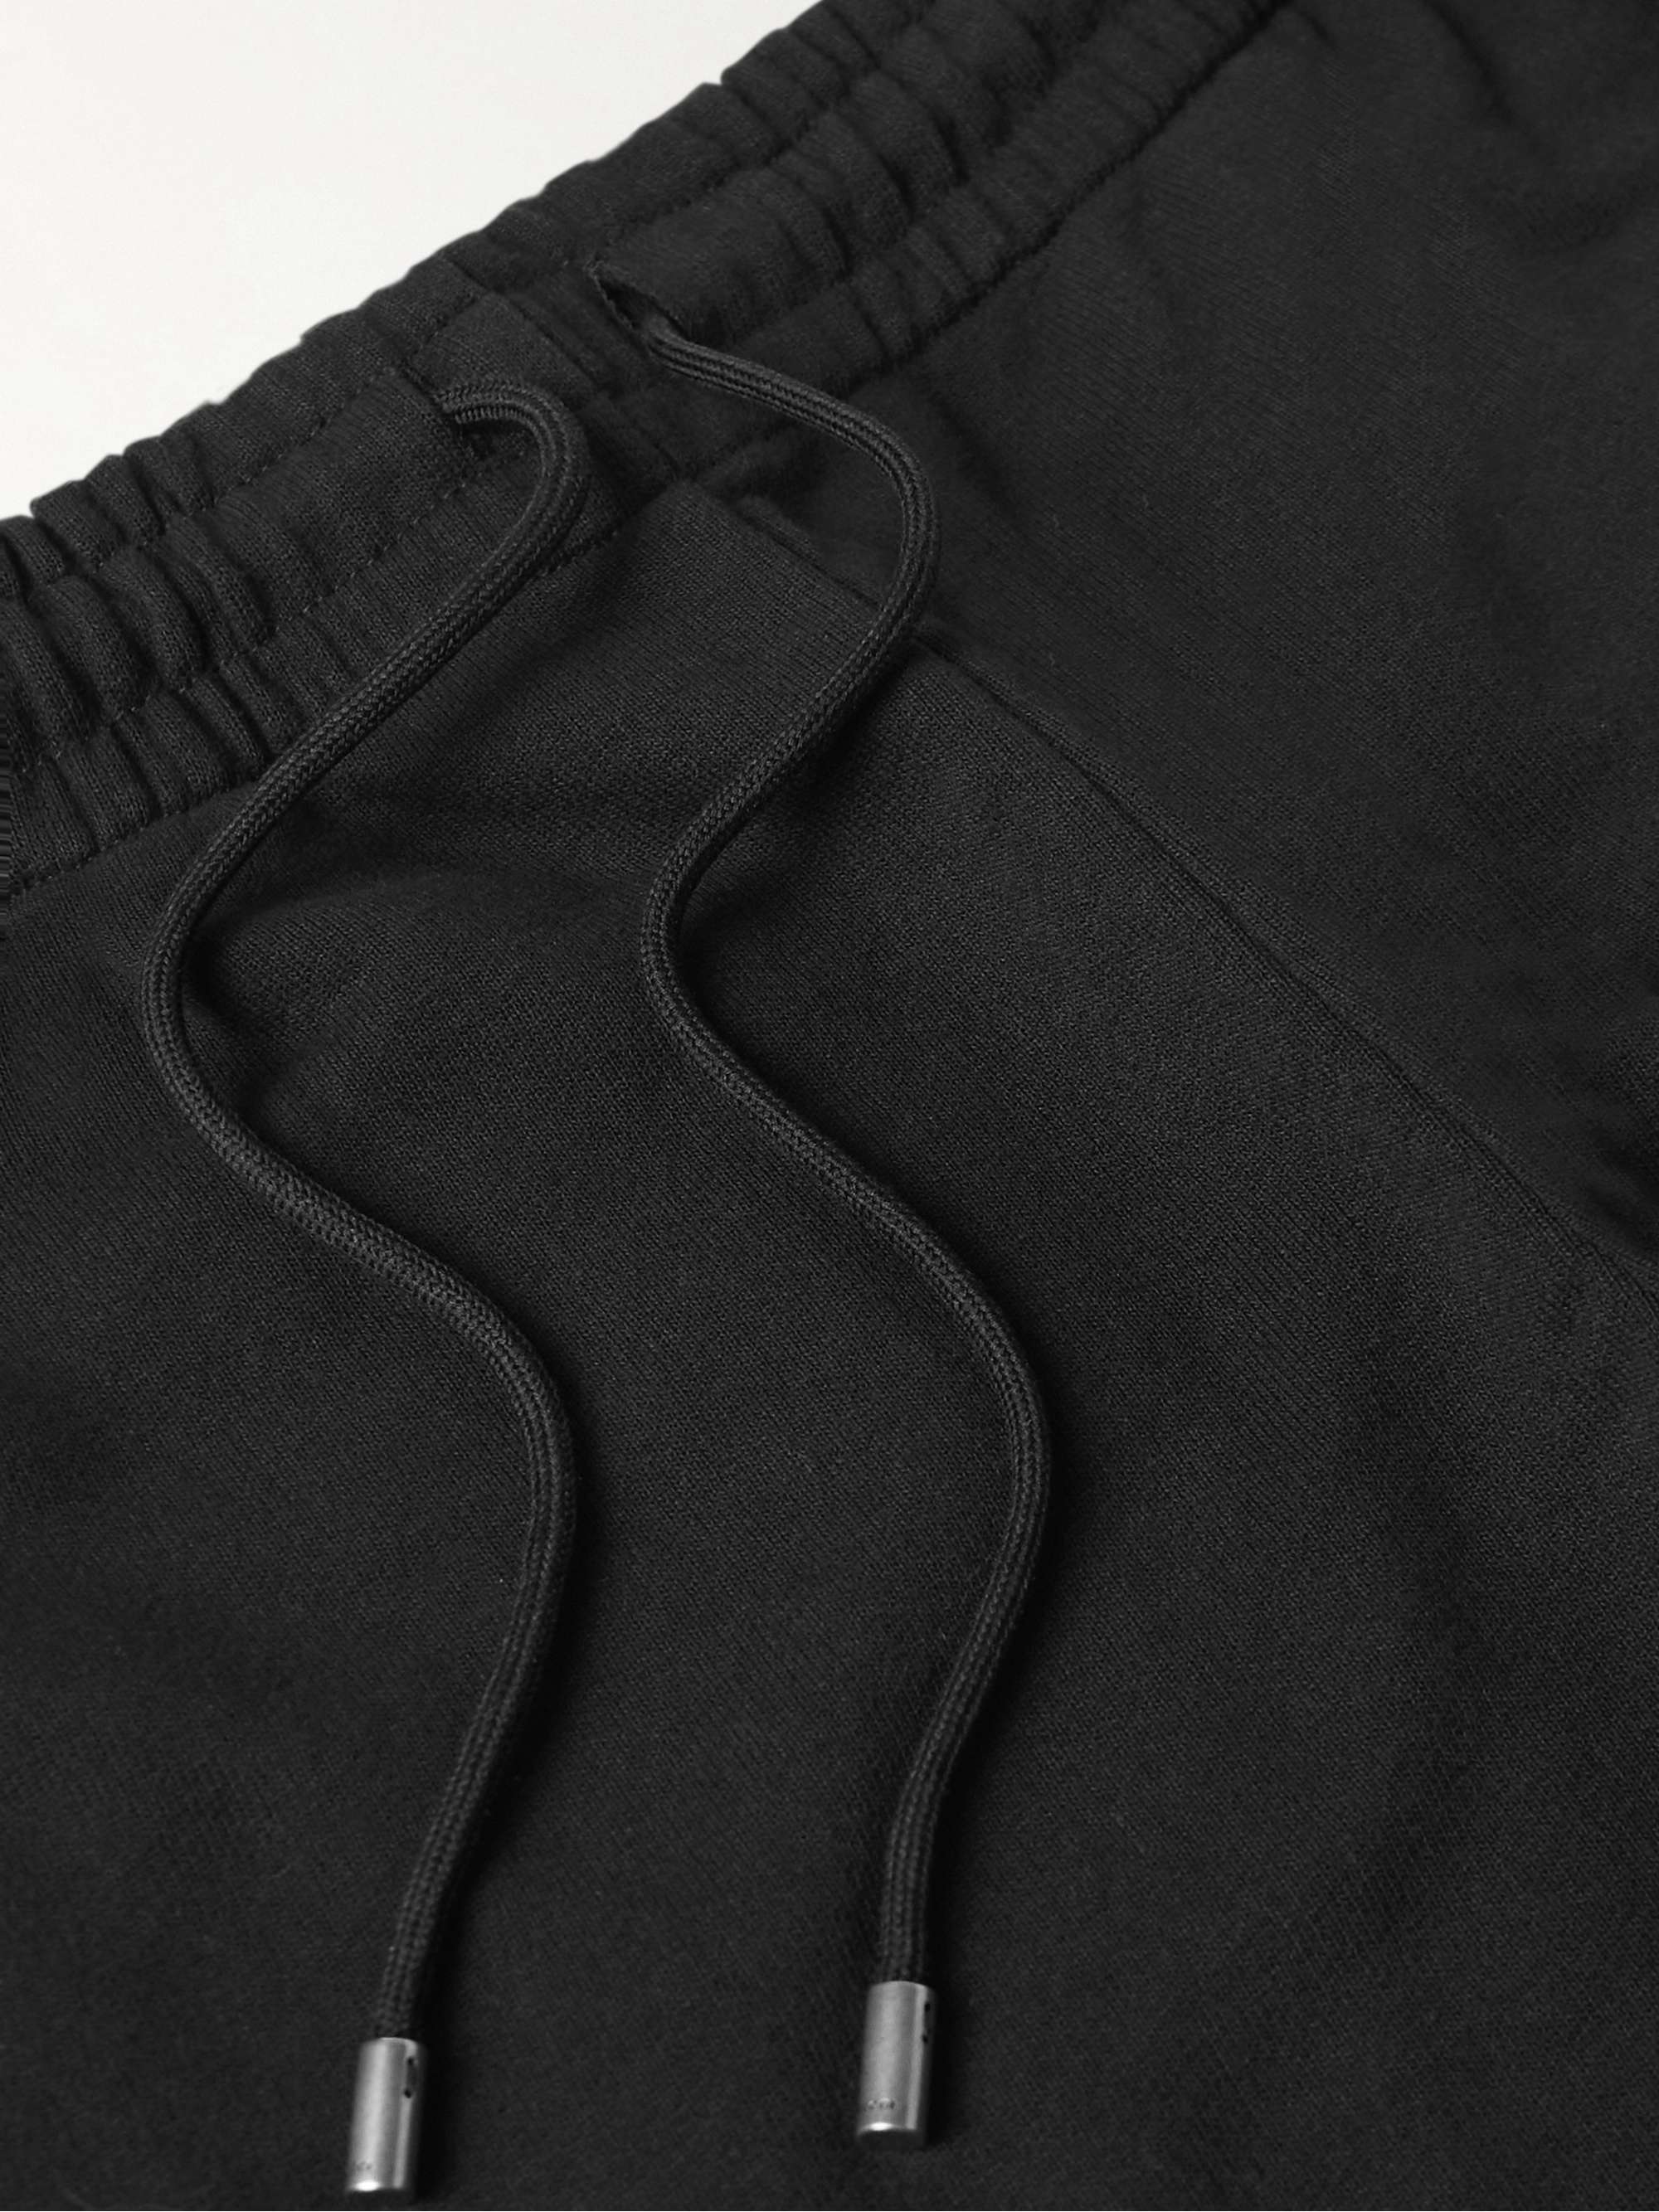 GUCCI Tapered Logo-Print Cotton-Jersey Sweatpants | MR PORTER